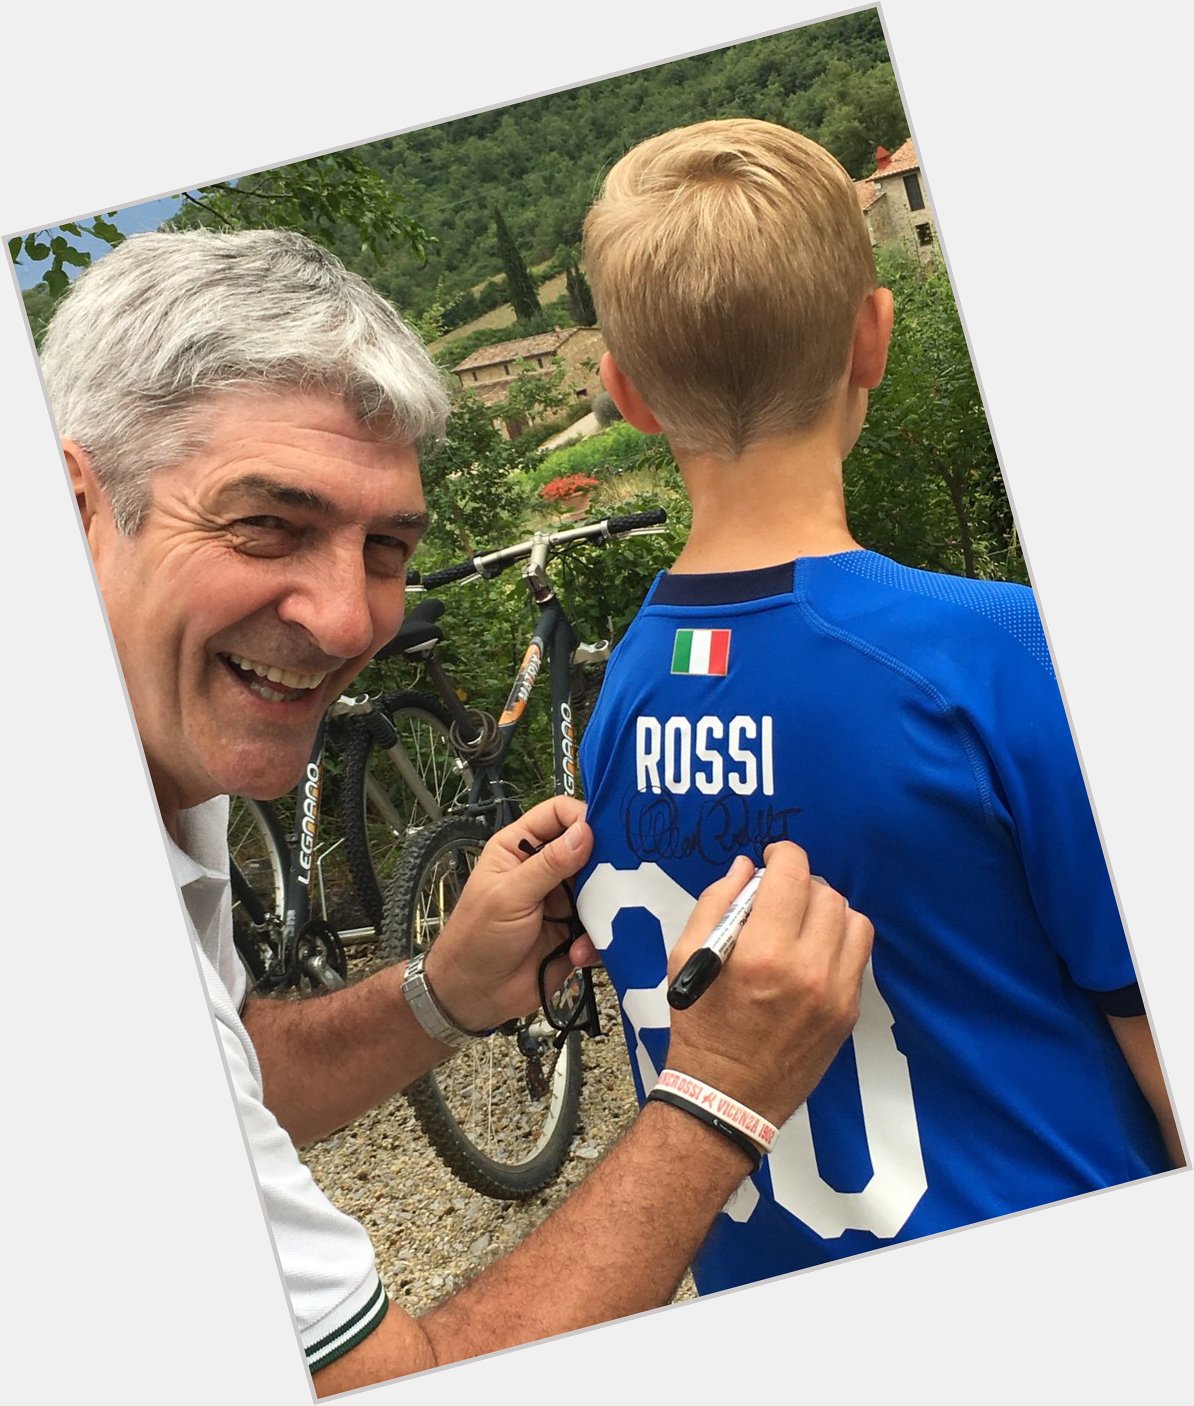 Happy Birthday - buon compleanno, legend Paolo Rossi!
A true pleasure to meet you. 